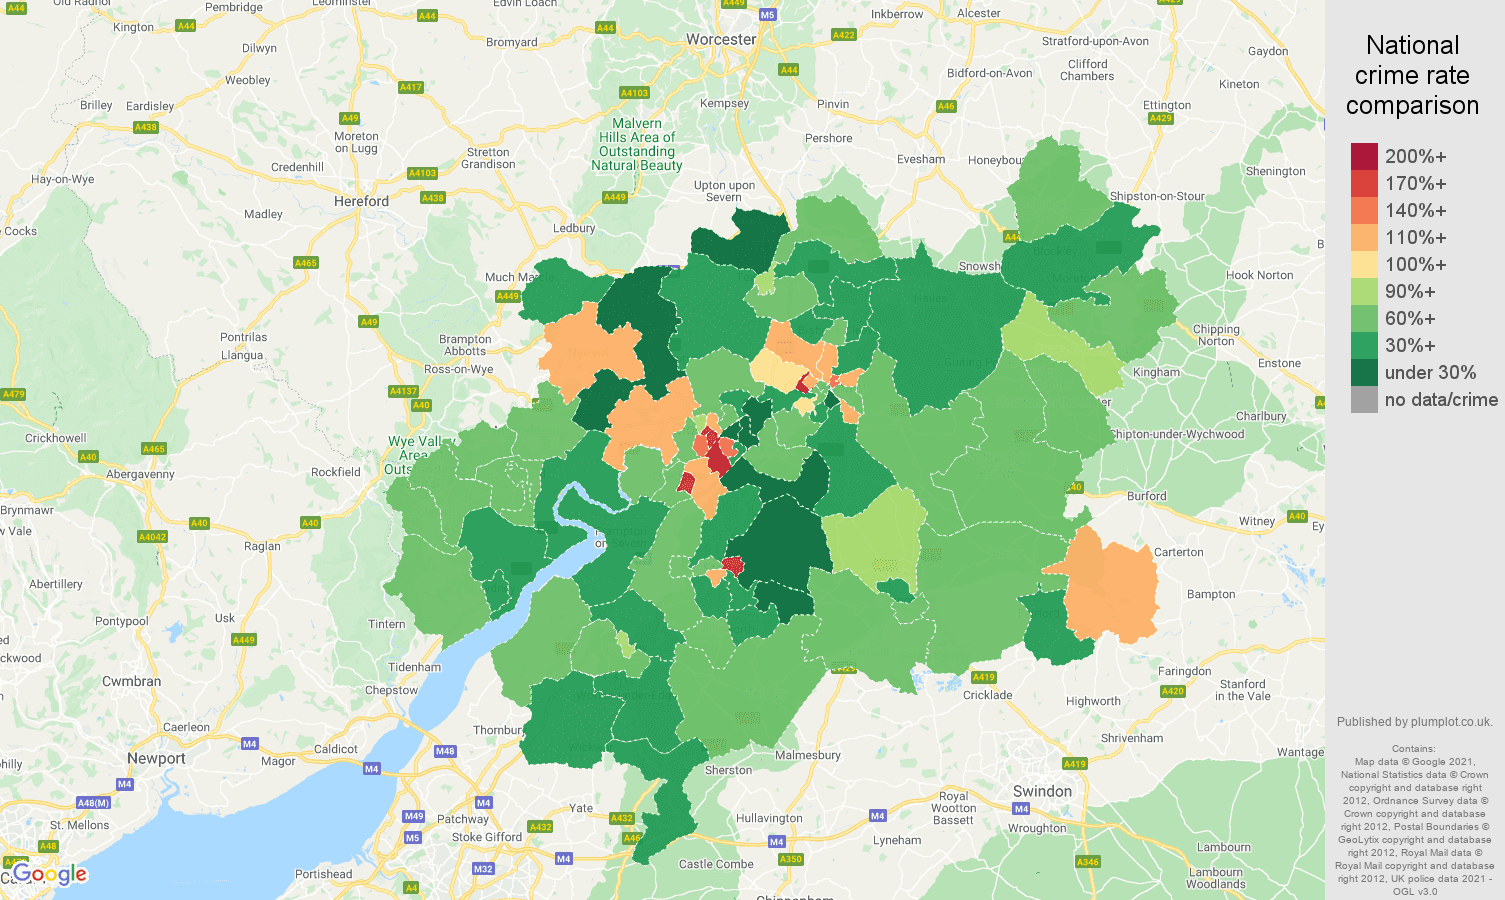 Gloucester criminal damage and arson crime rate comparison map